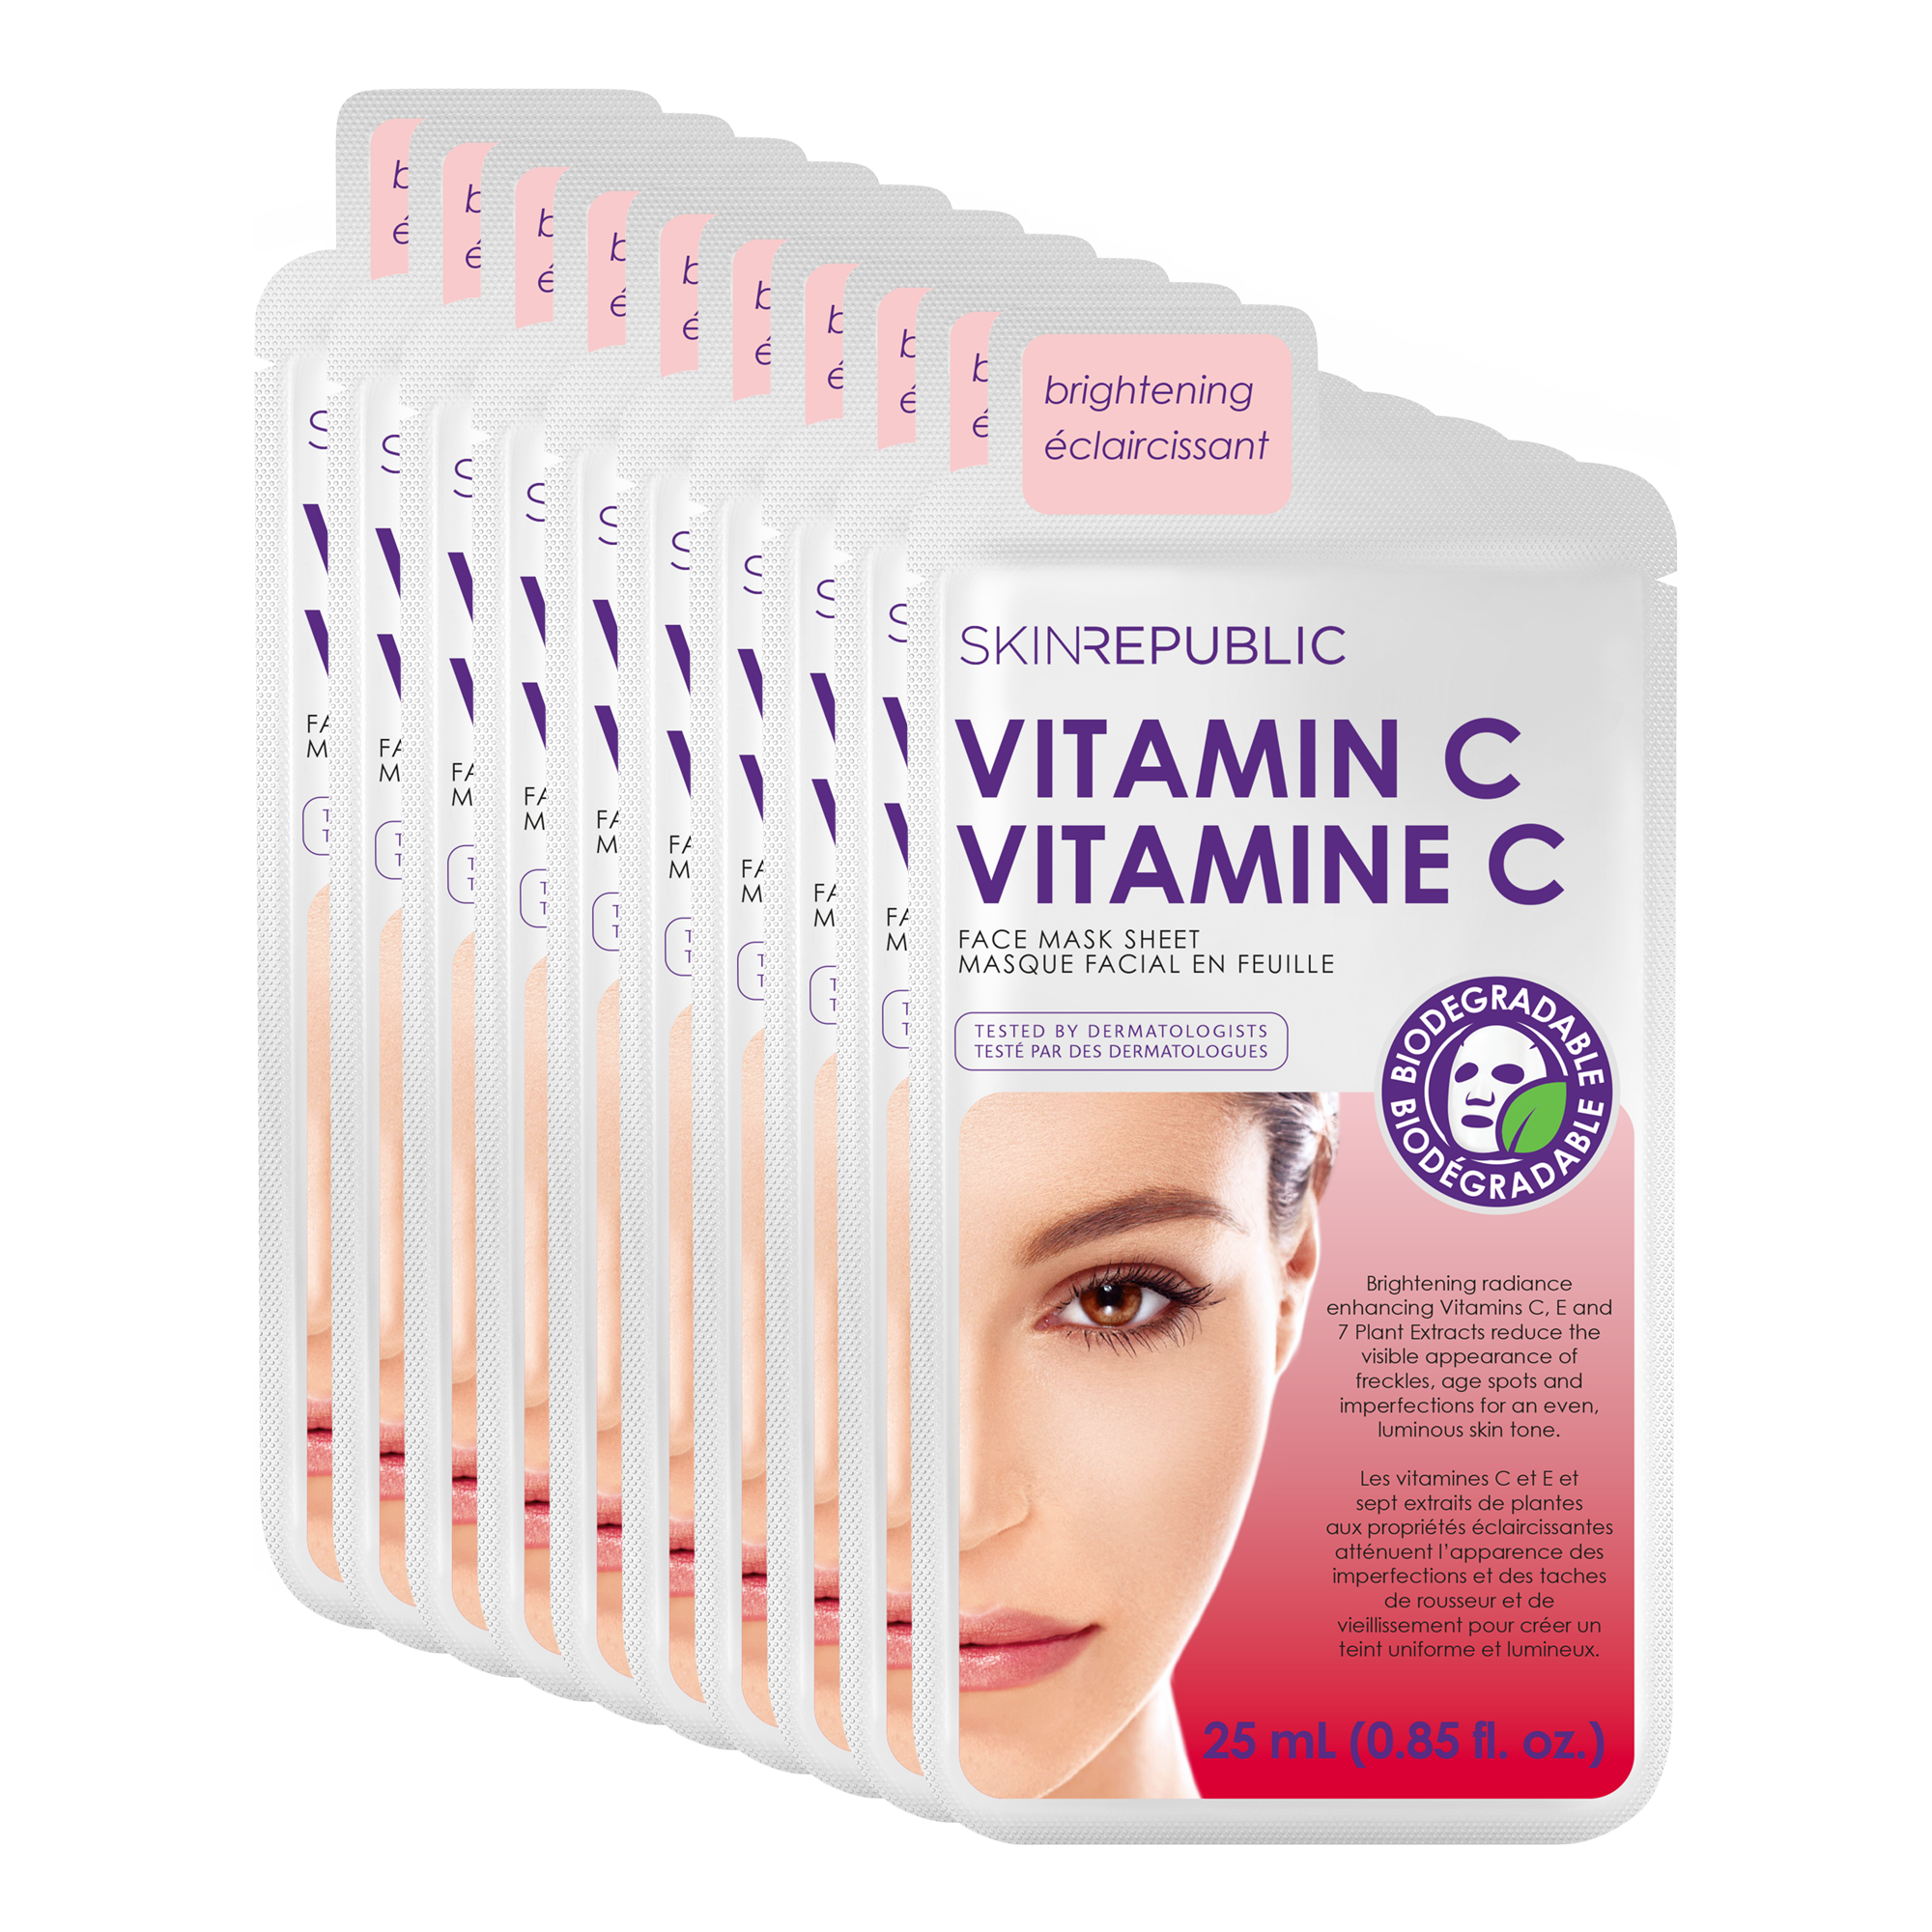 Brightening Vitamin C Face Mask Sheet - 10 Pack